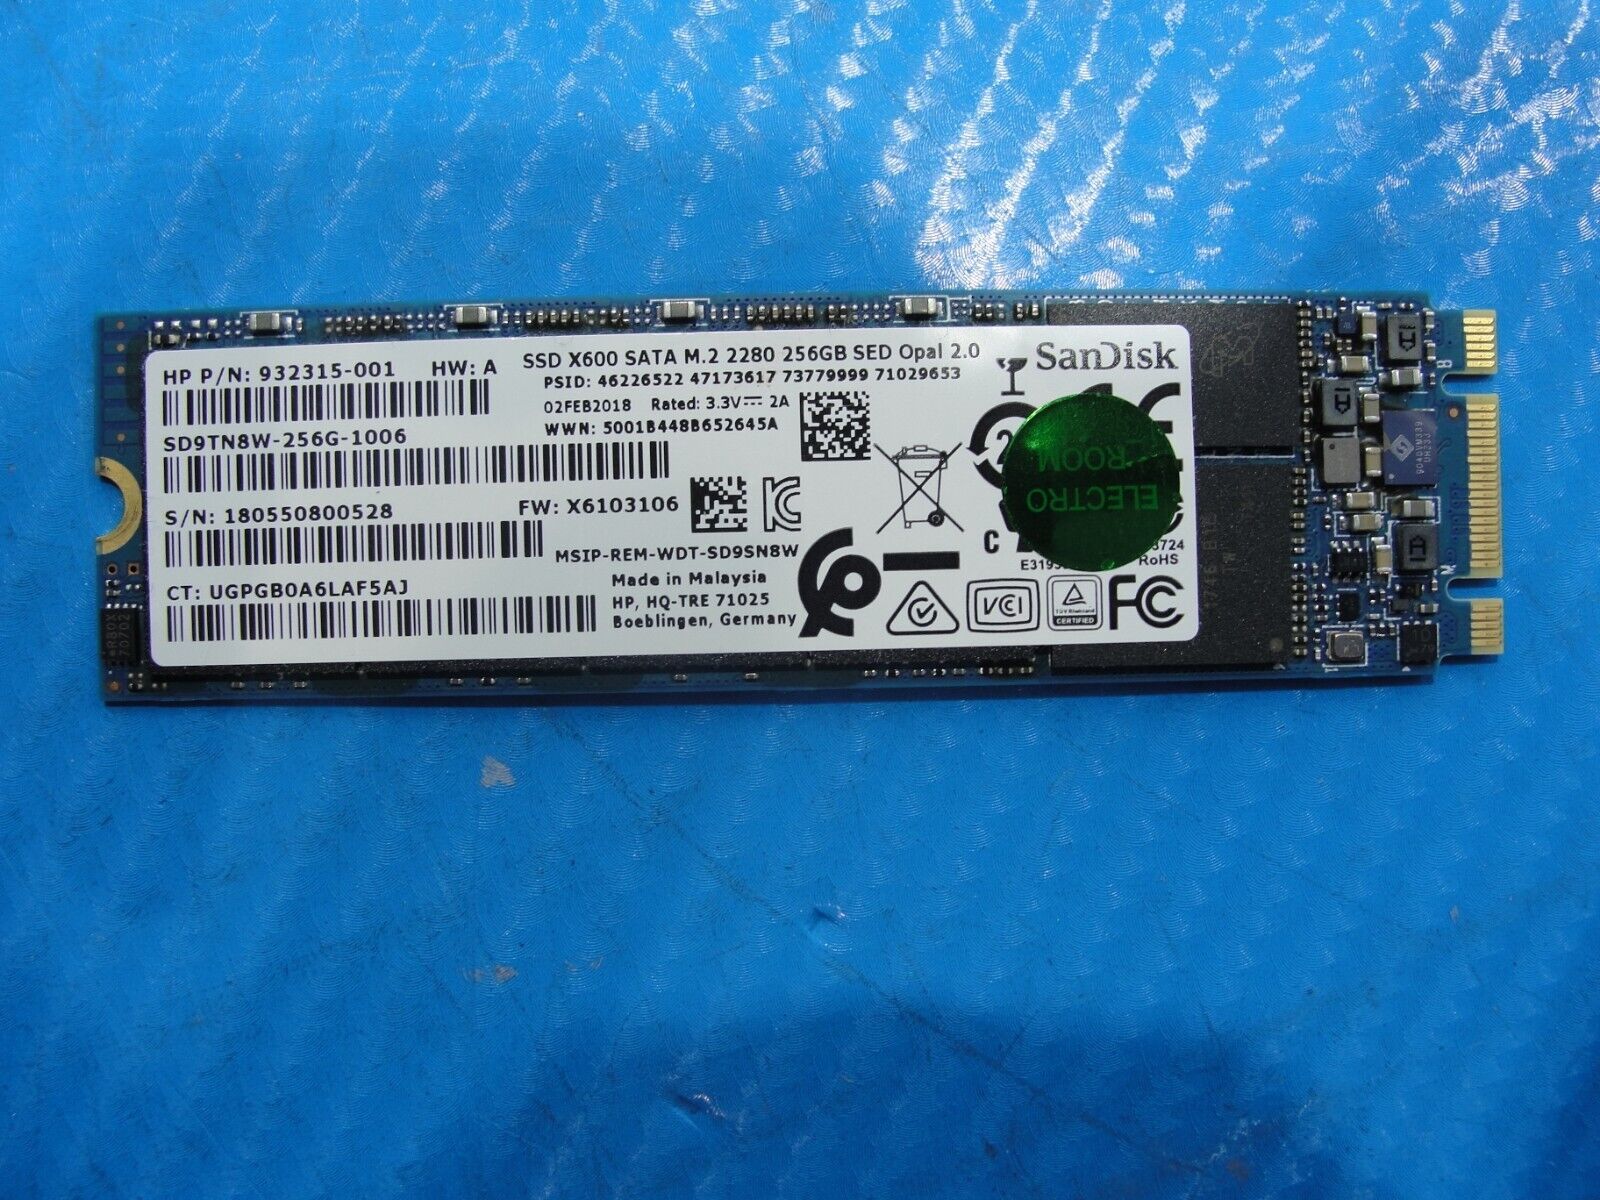 HP 1030 G2 SanDisk 256Gb Sata M.2 SSD Solid State Drive SD9TN8W-256G-1006